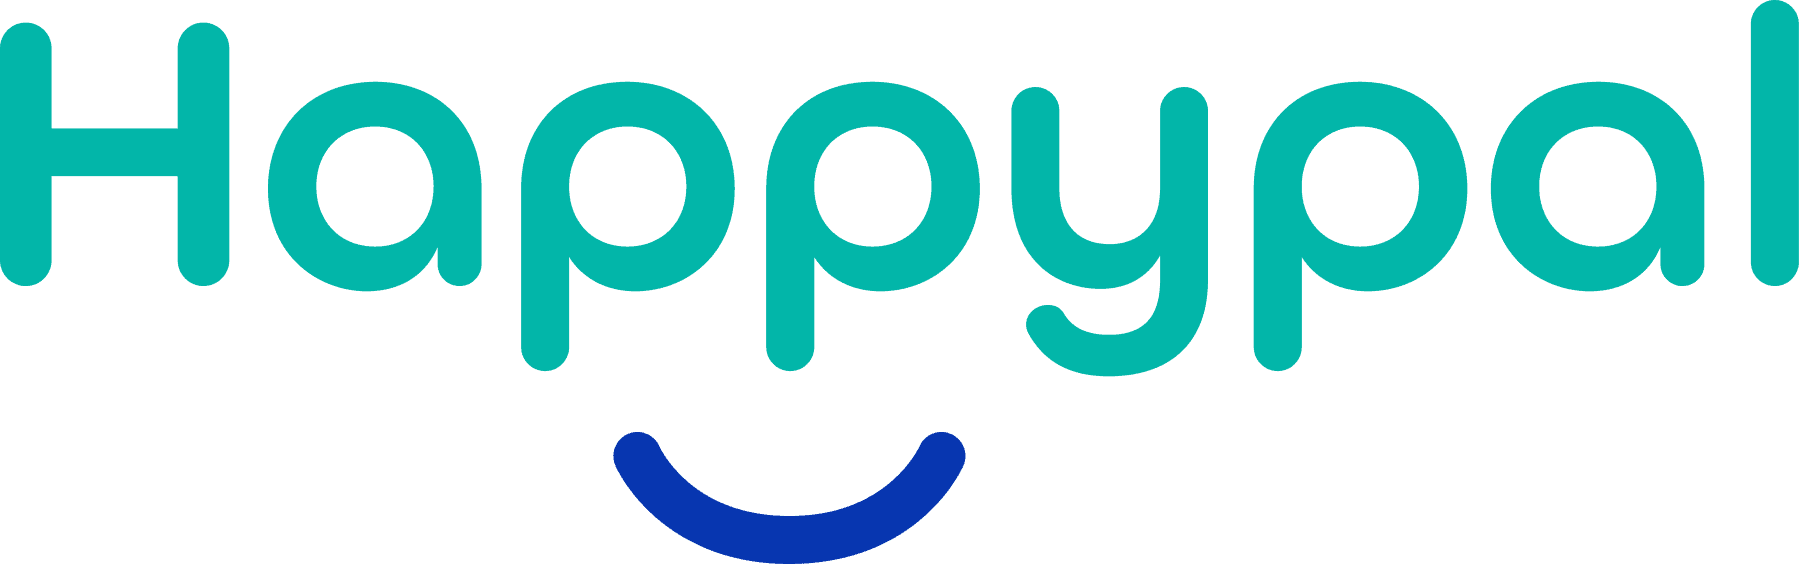 happypal logo cse